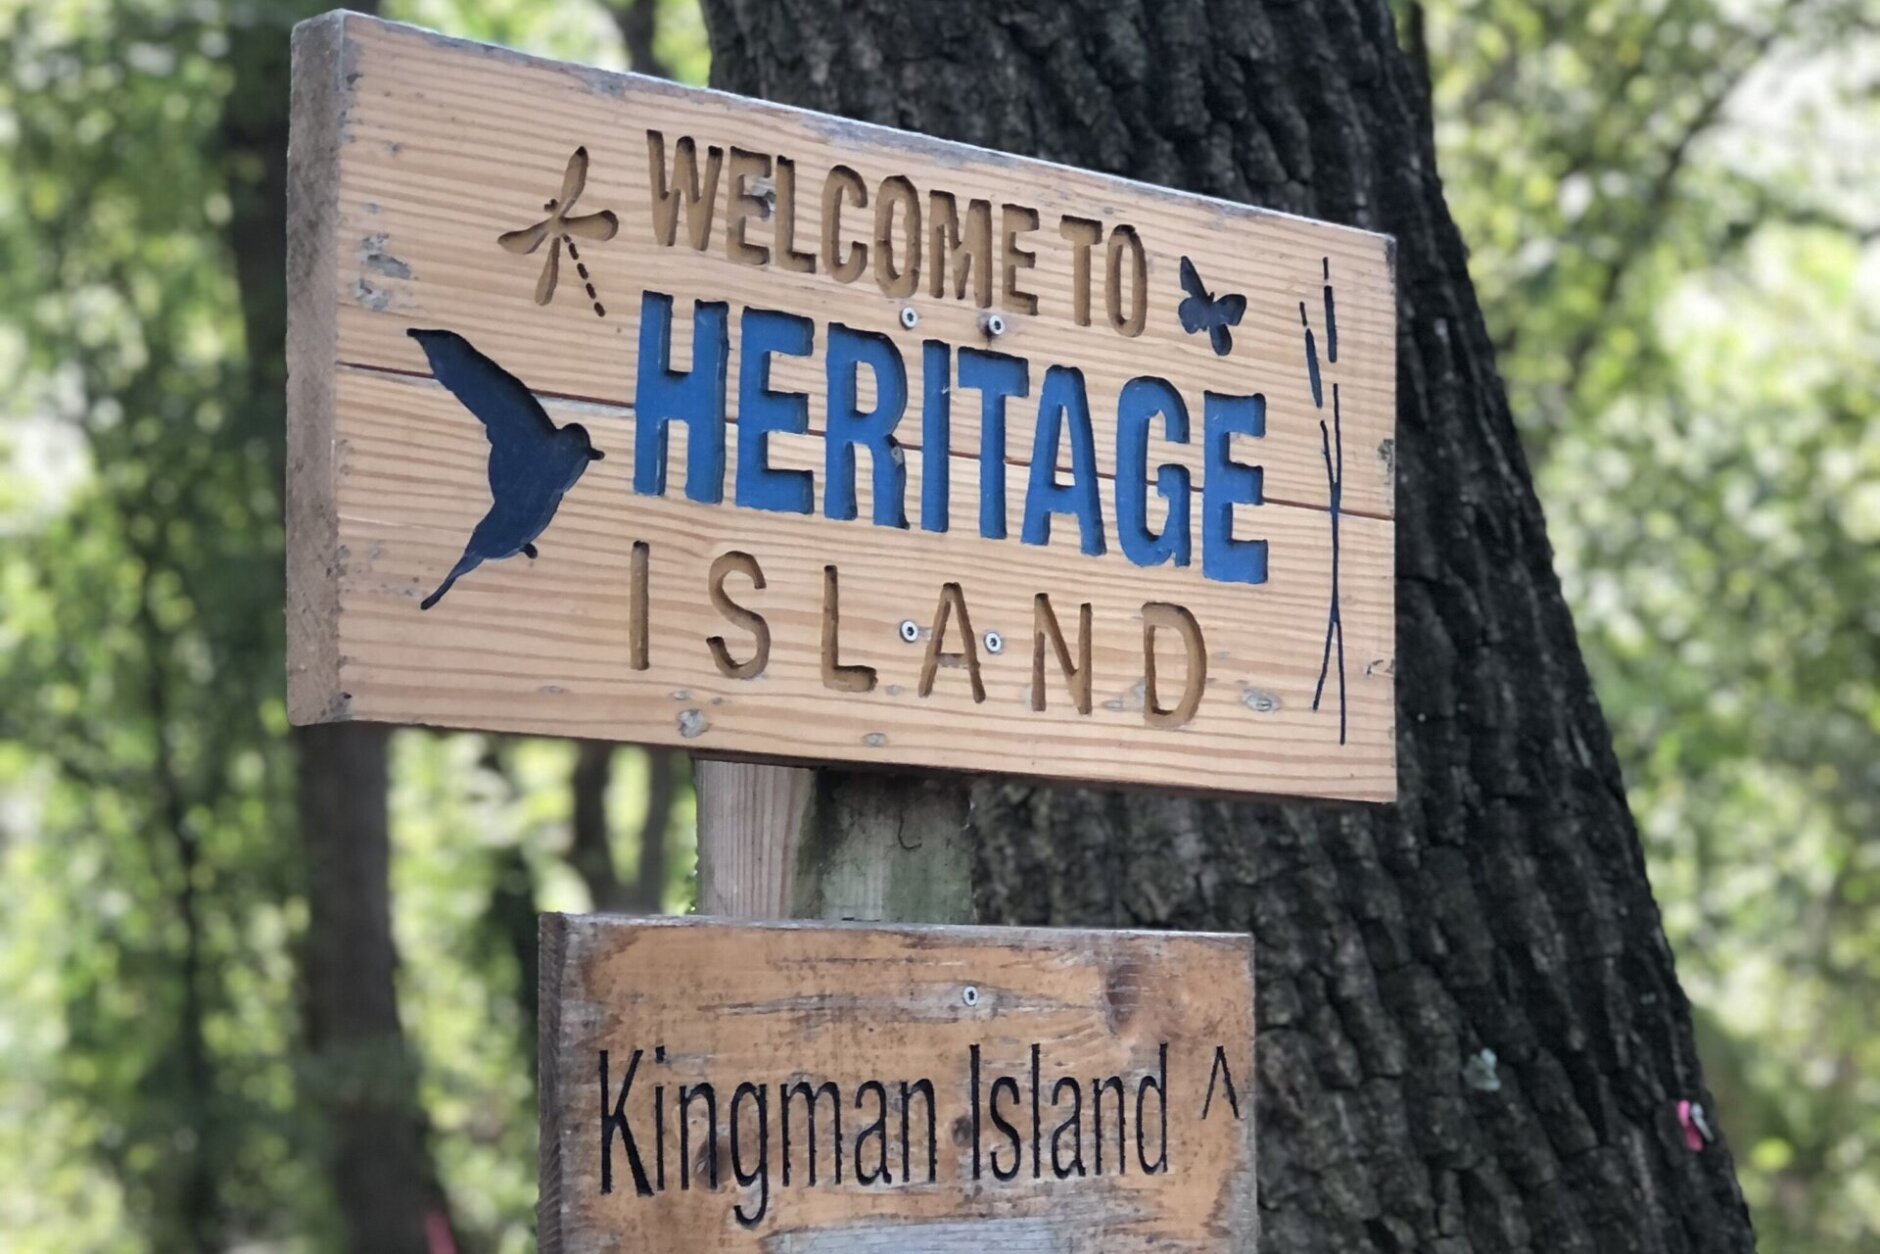 Kingman Island